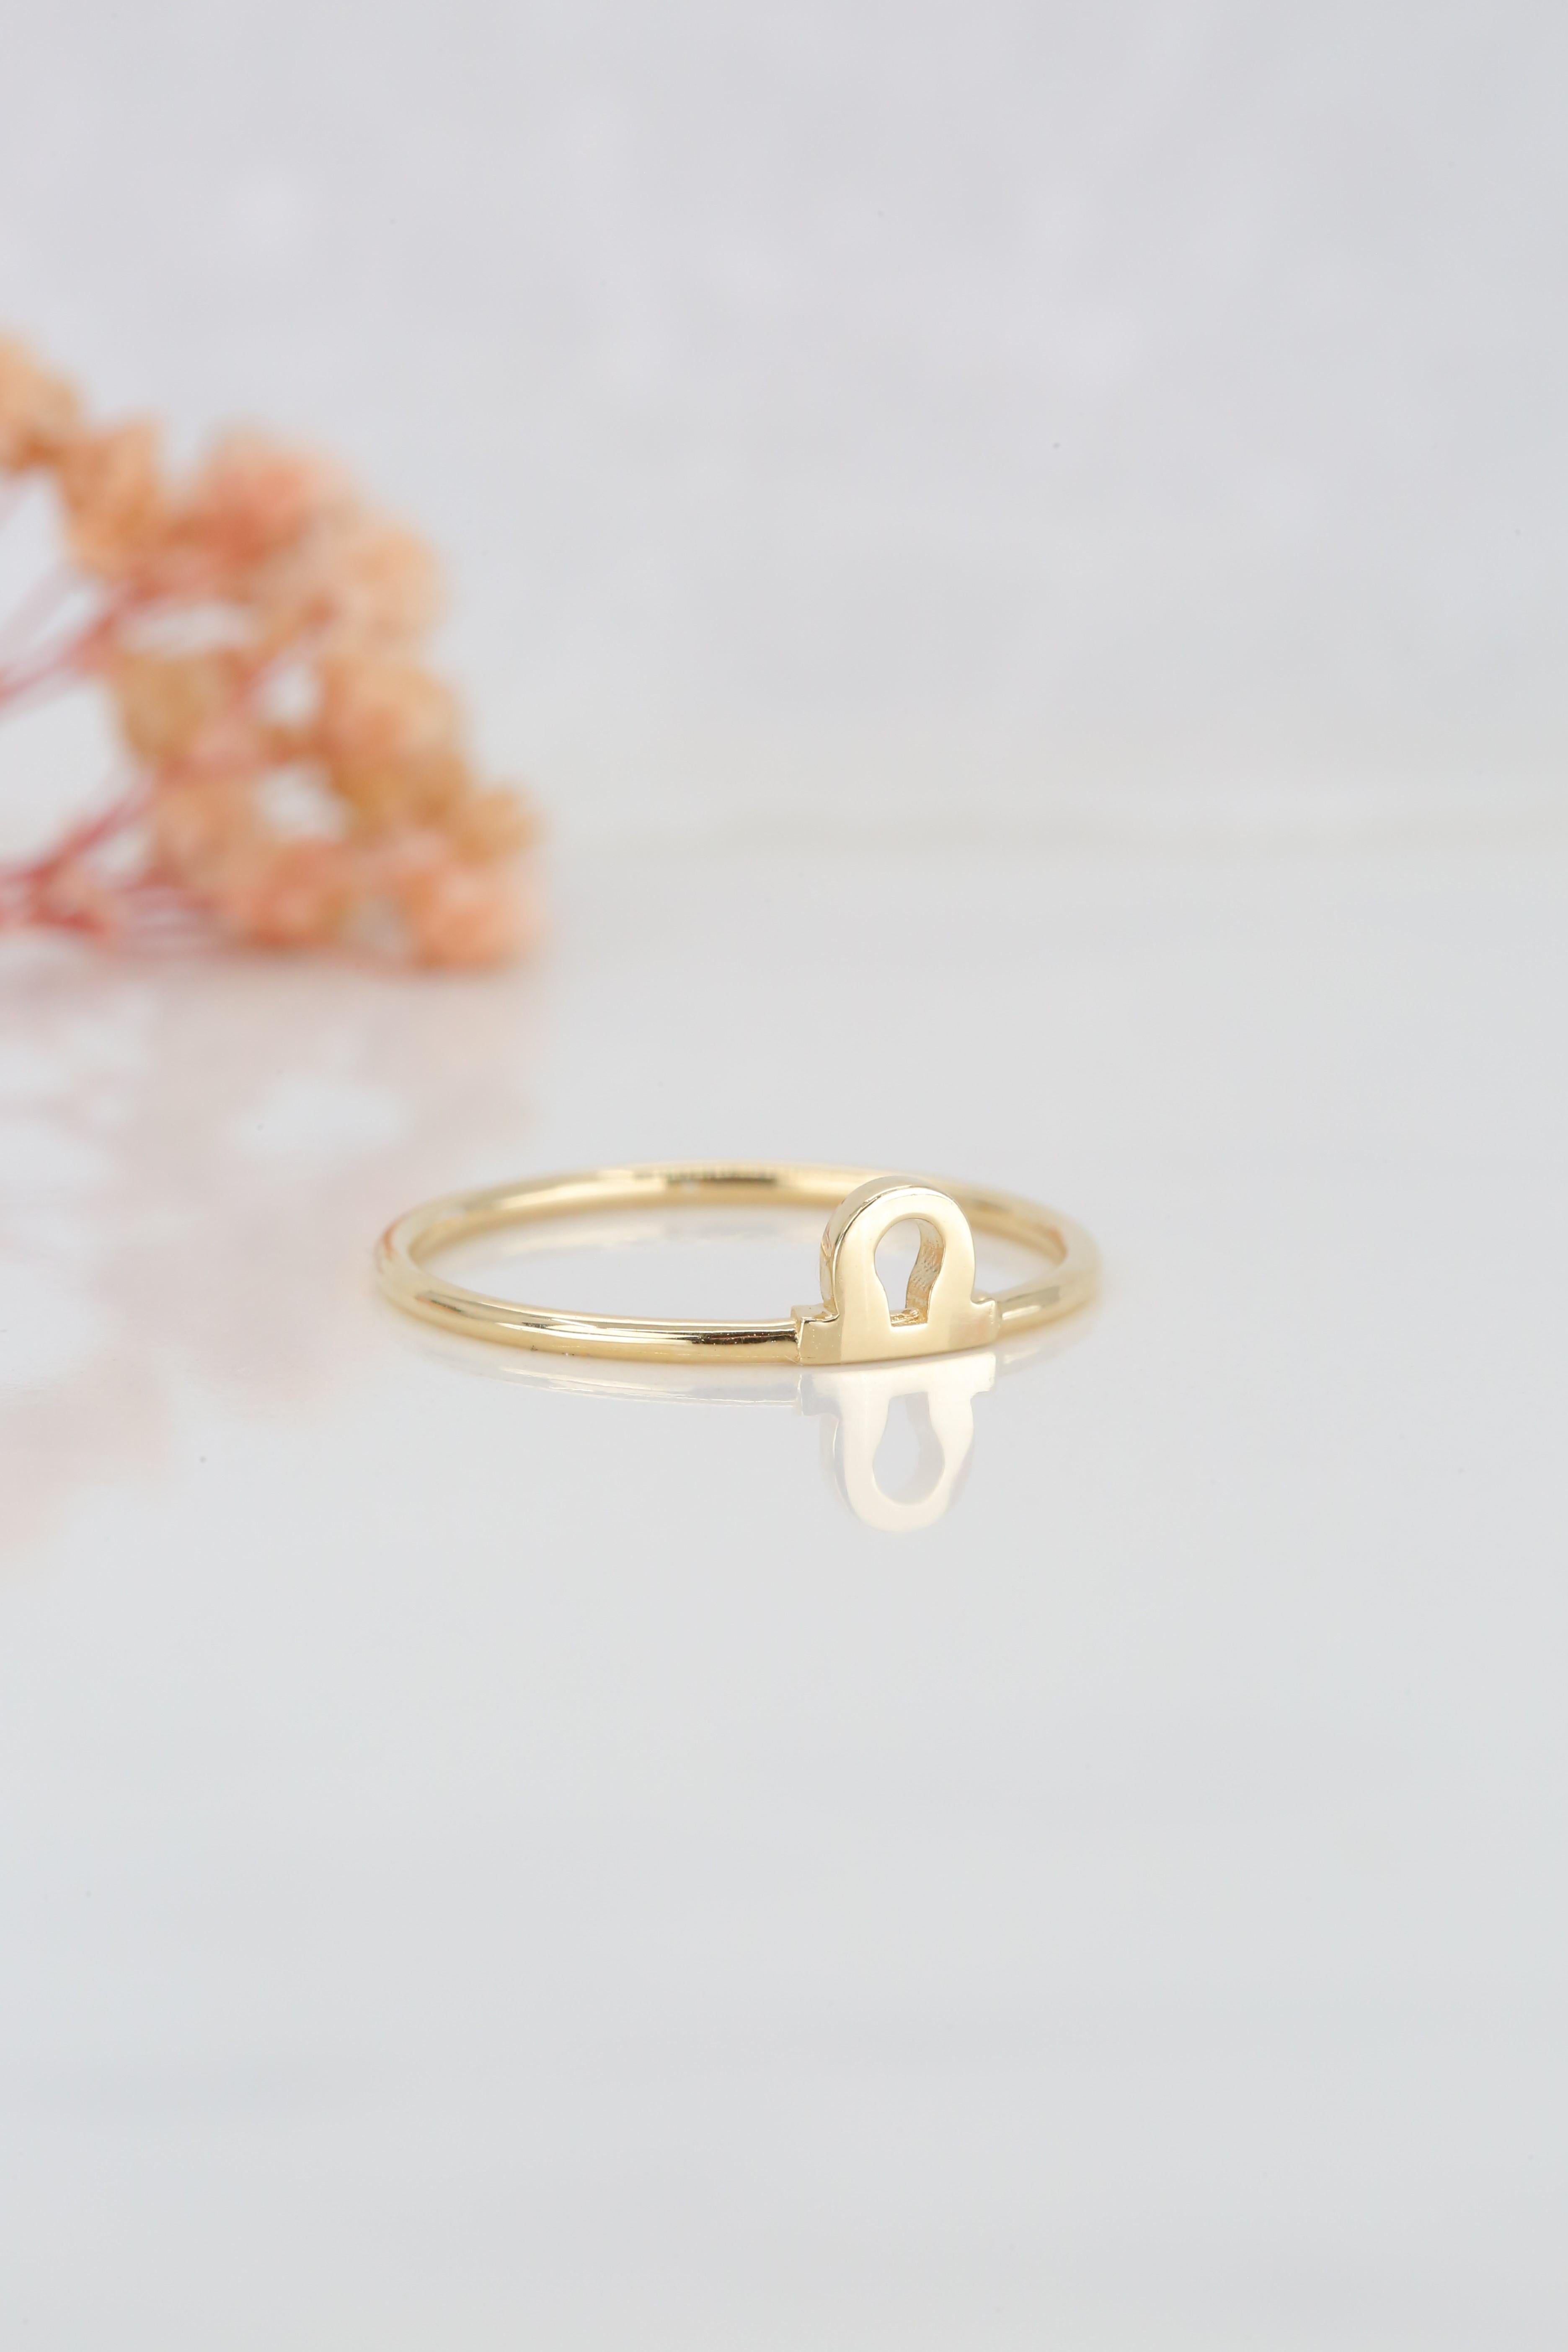 For Sale:  14k Gold Libra Ring, Libra Sign Gold Ring 9